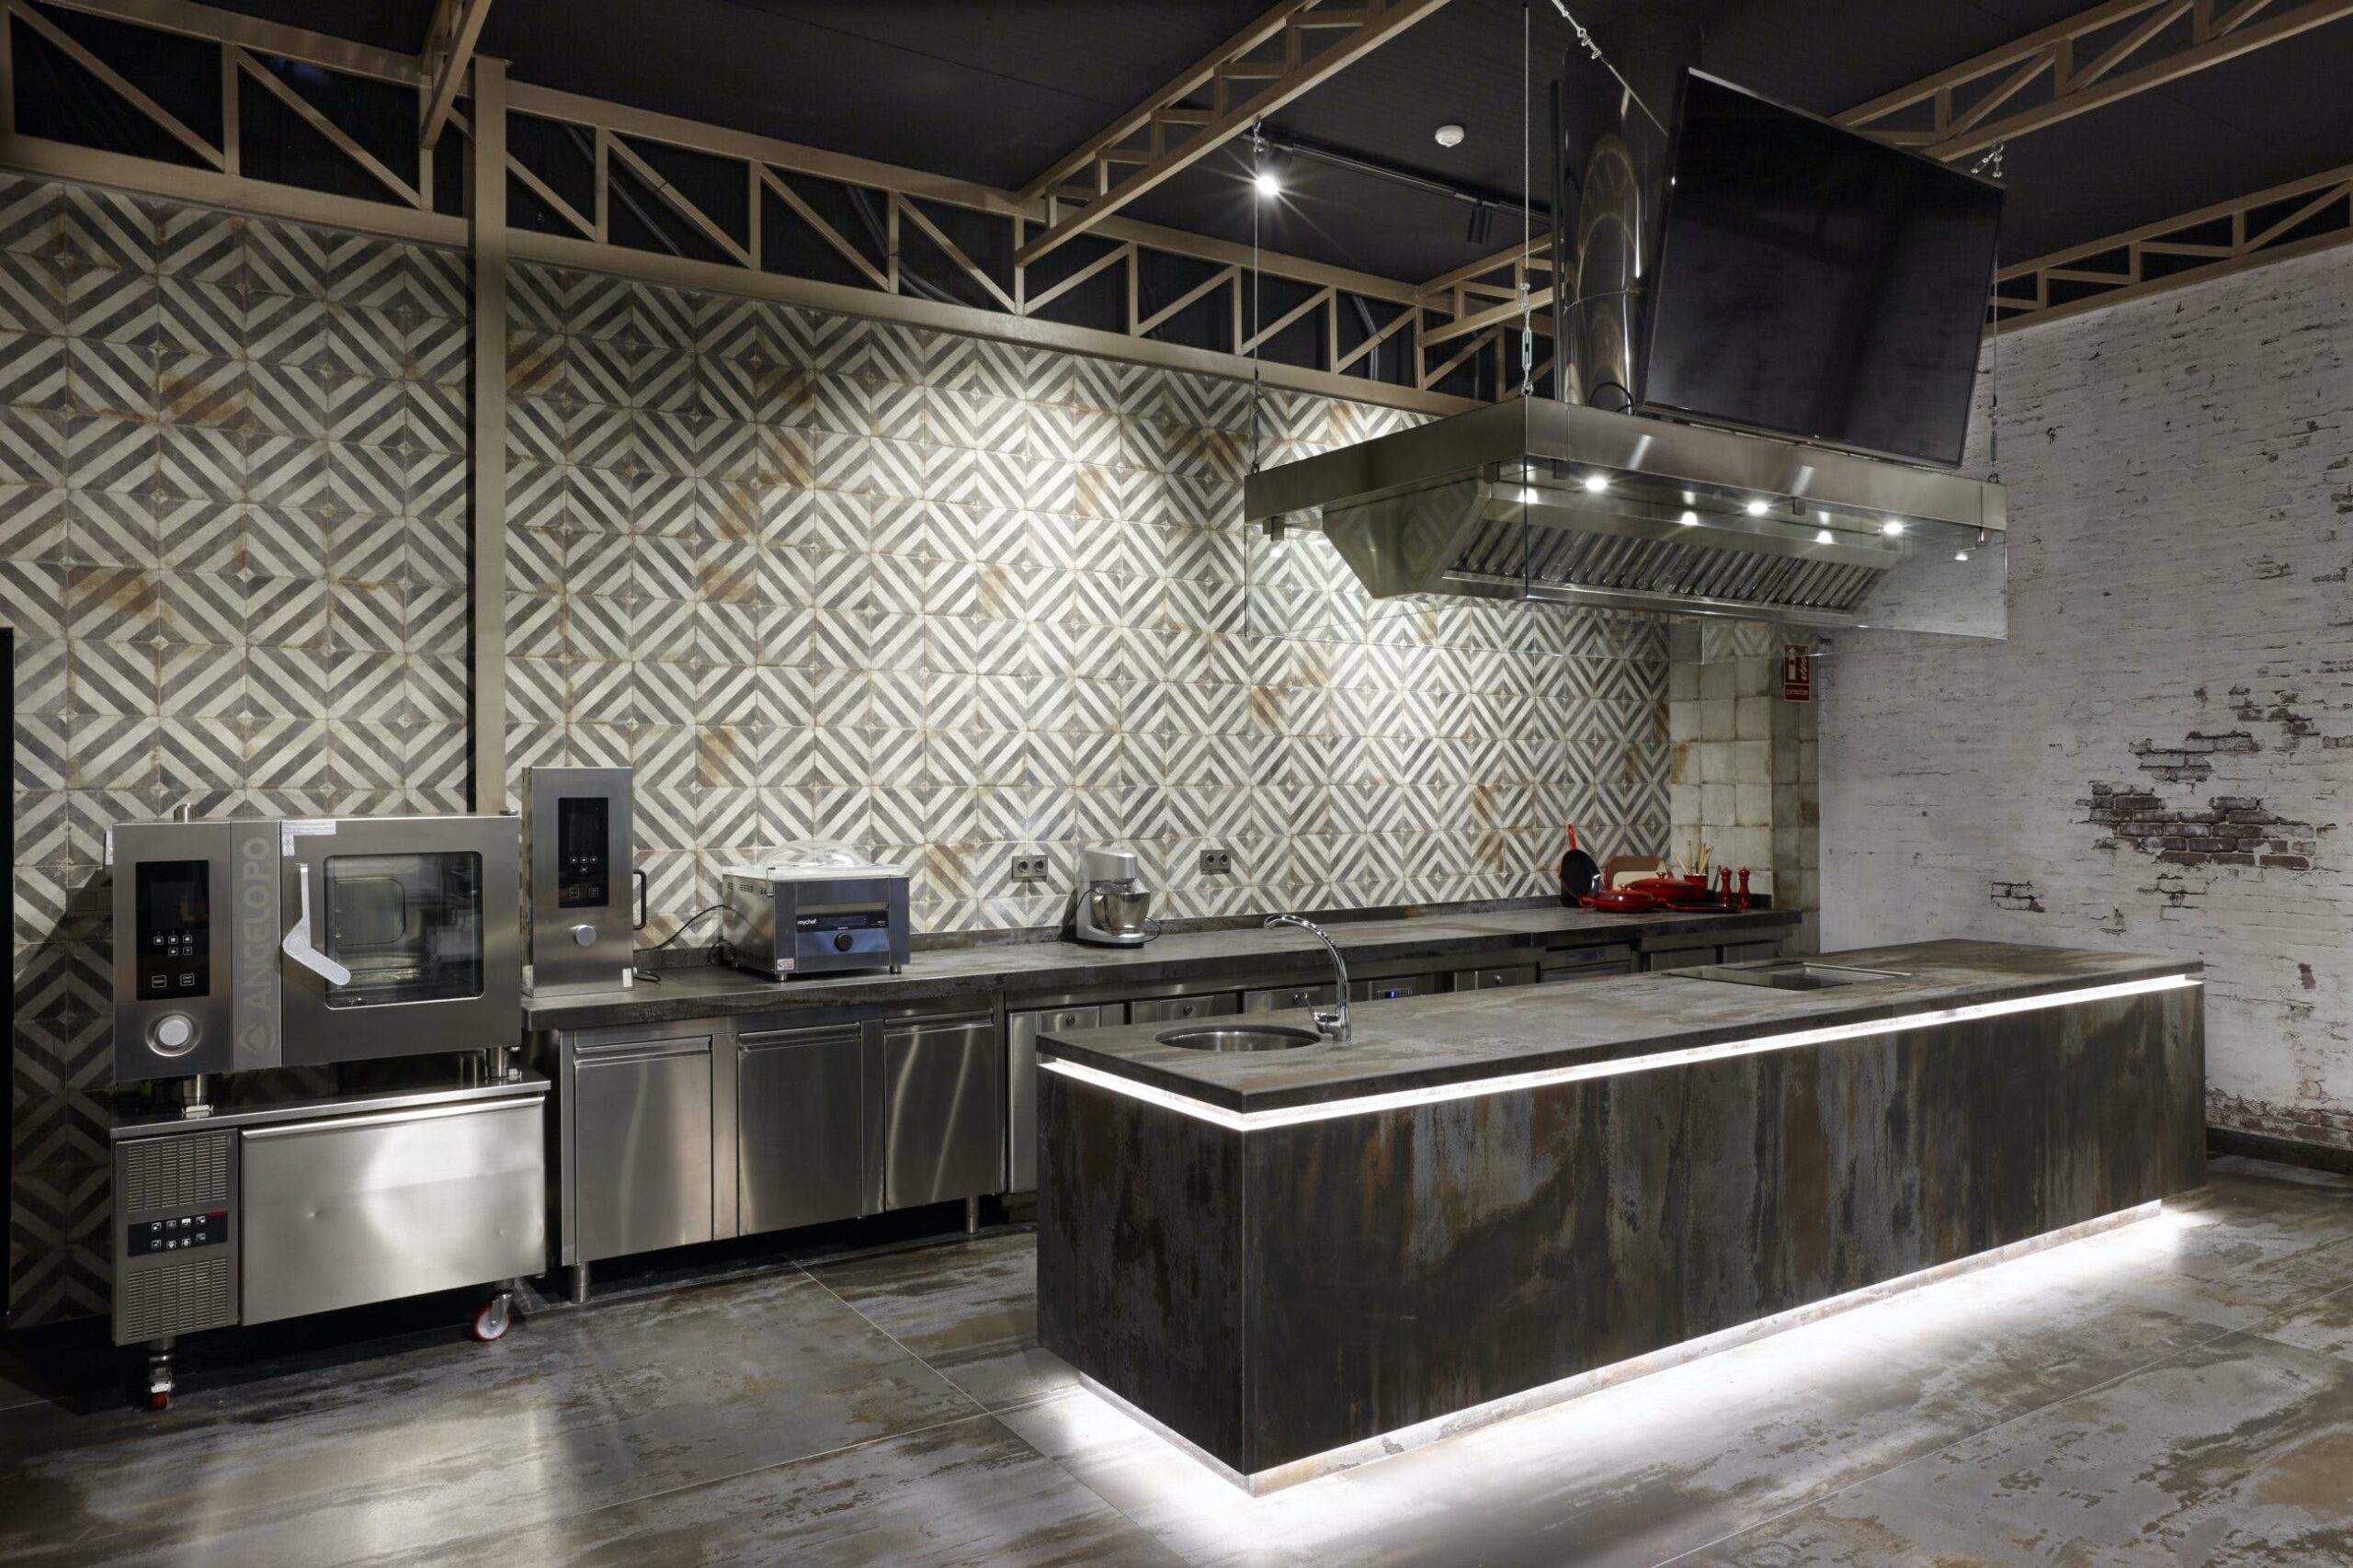 Pilsa Educa Cookery Classroom With Trilium Flooring, Cladding and Worktop